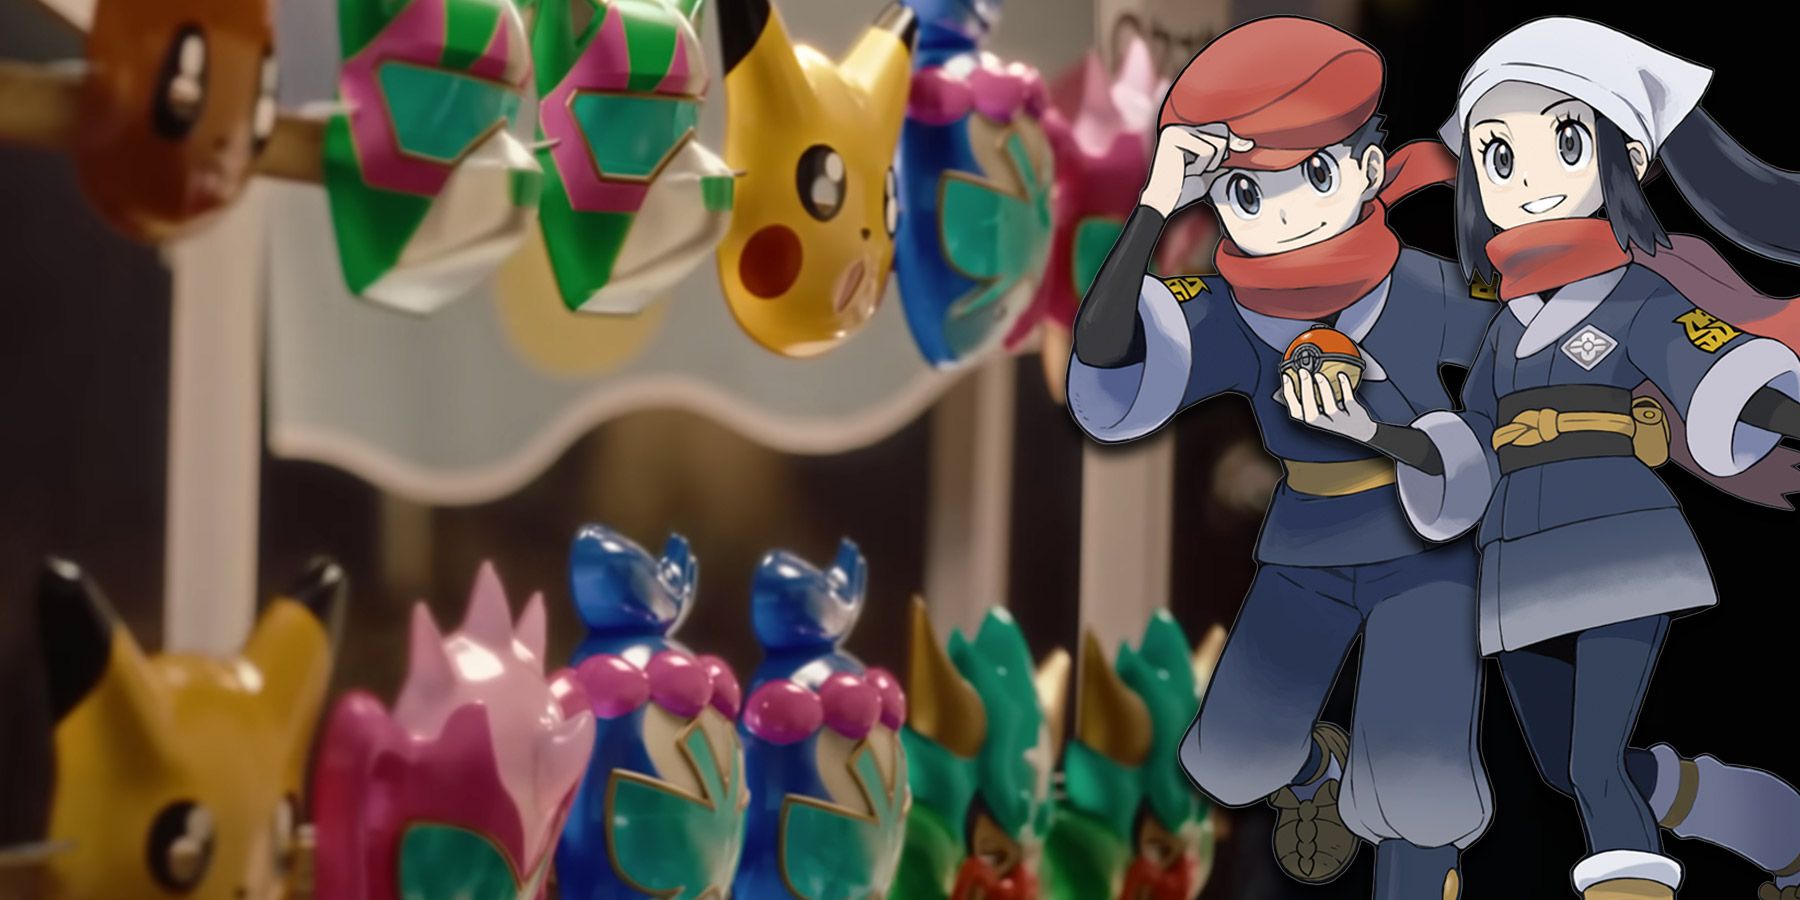 Pokémon Scarlet & Violet: The Teal Mask DLC - How To Get The